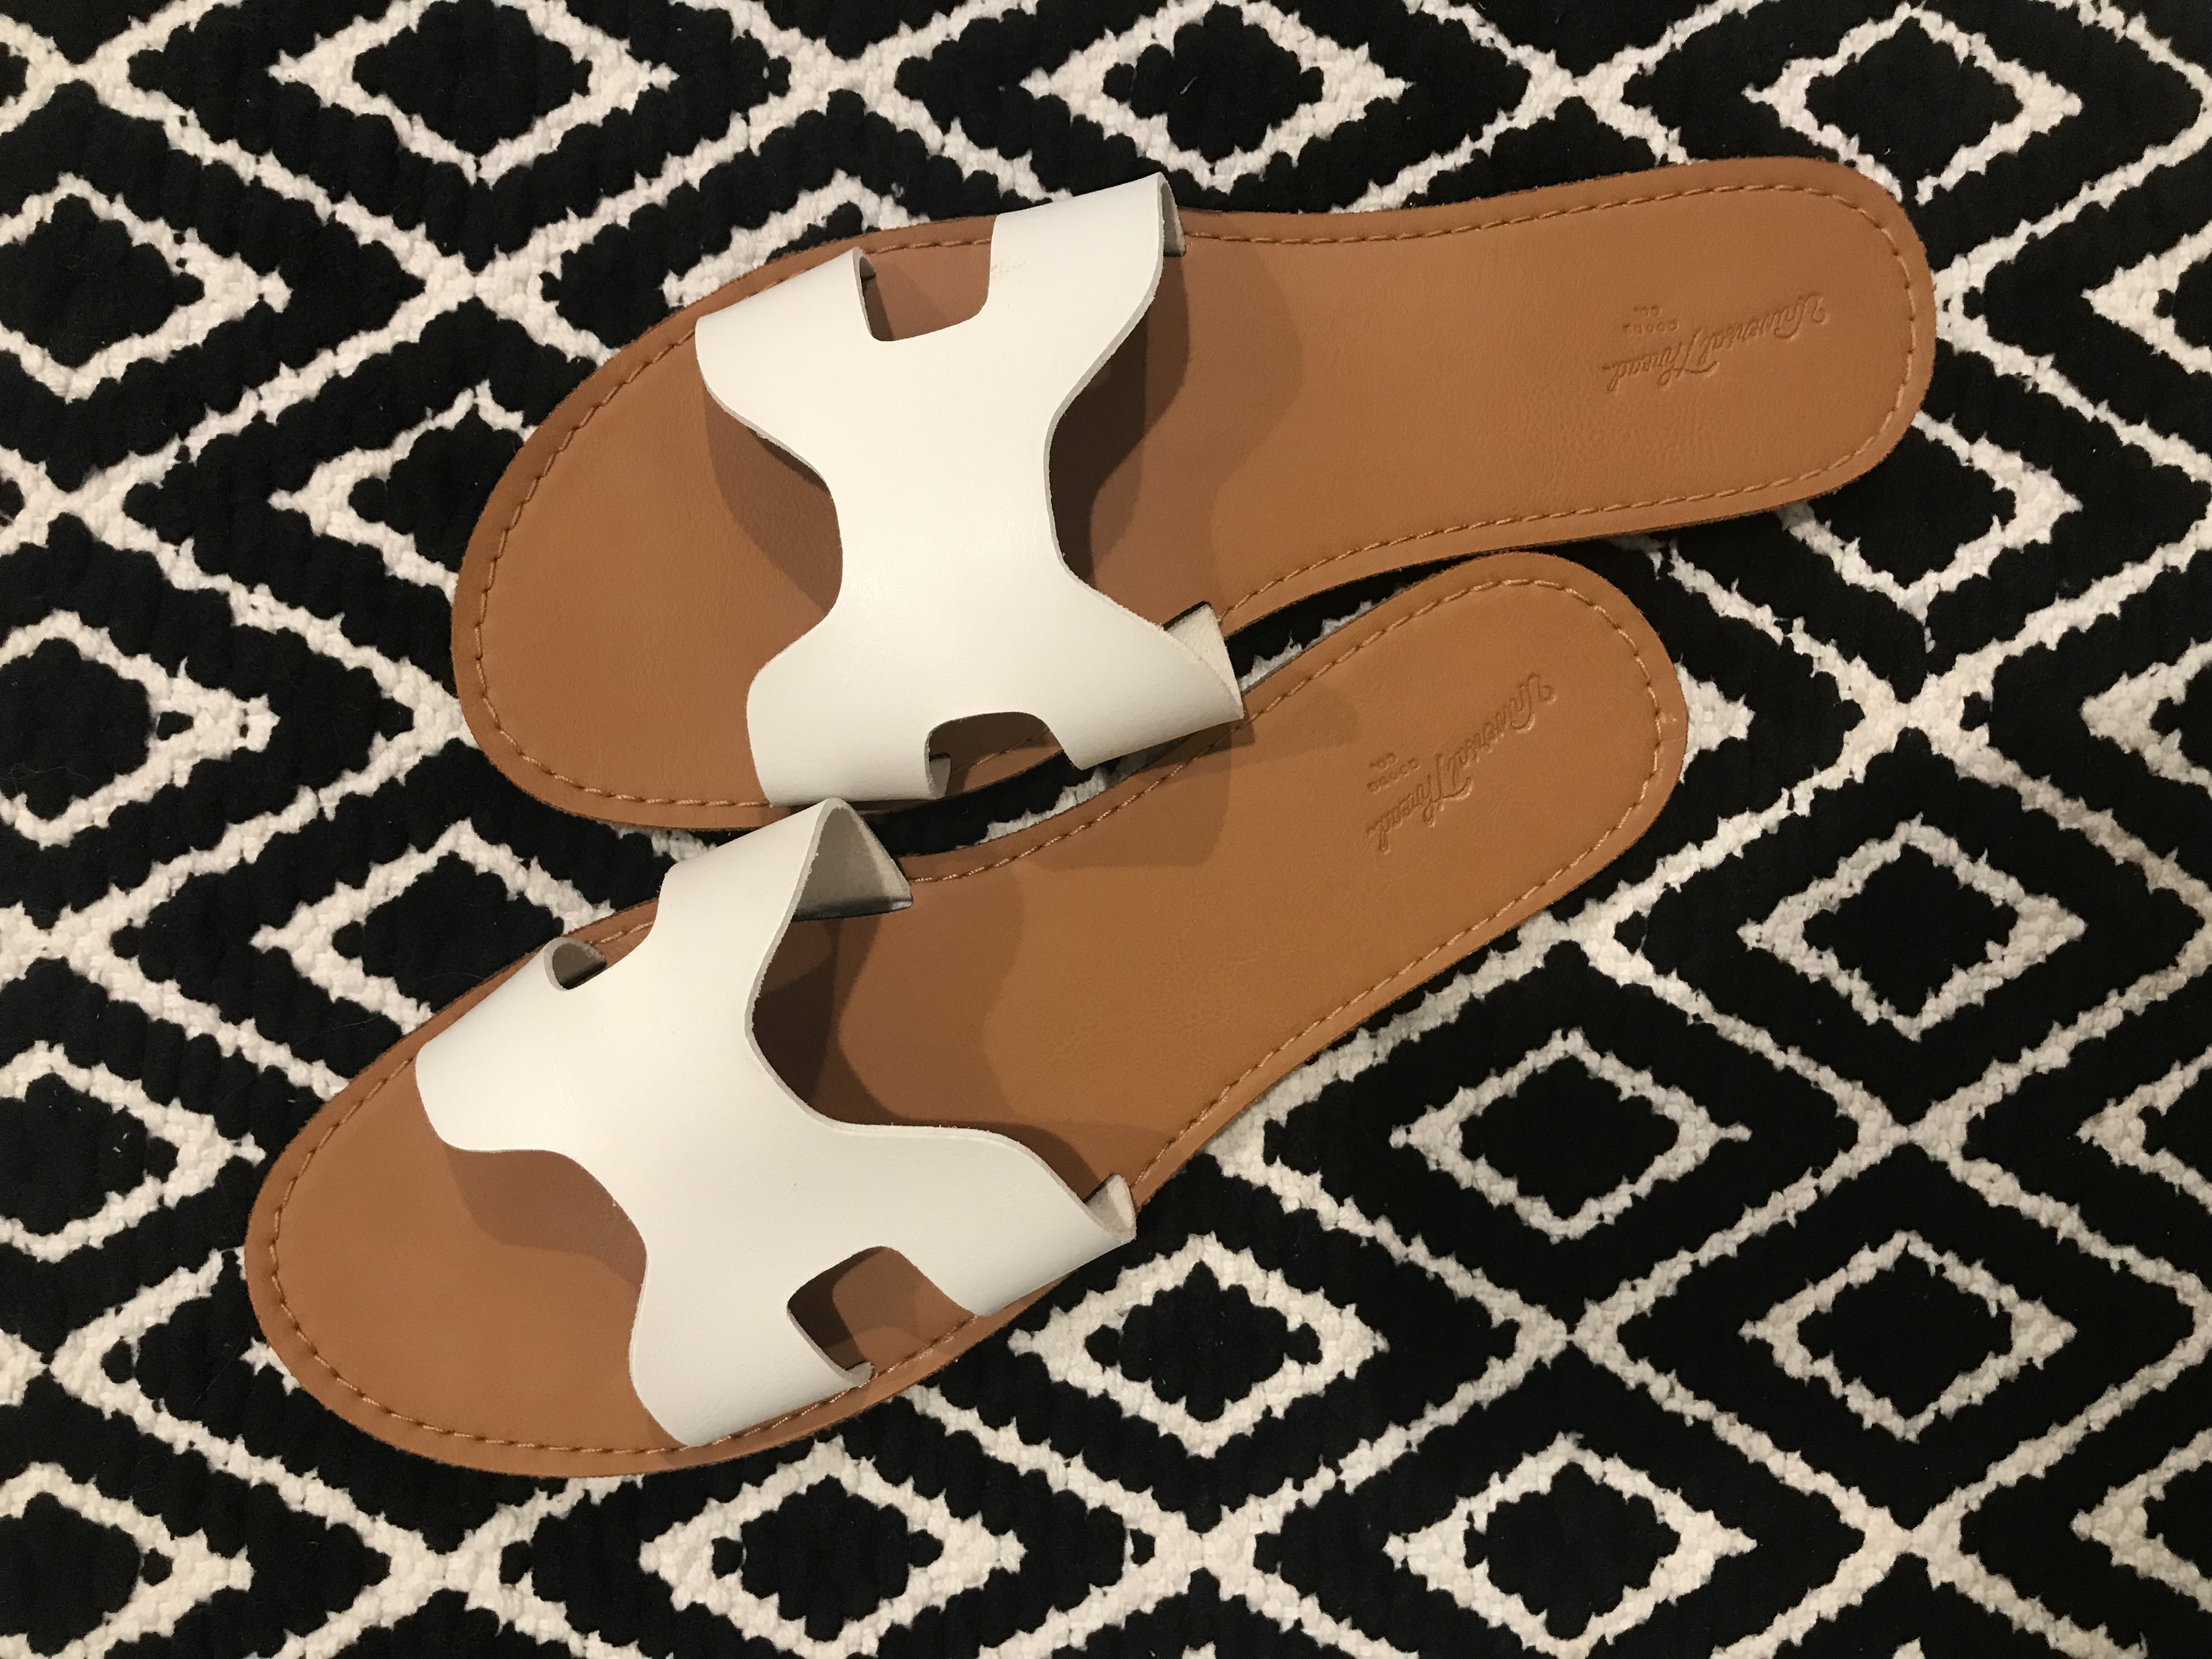 target sandals 2019